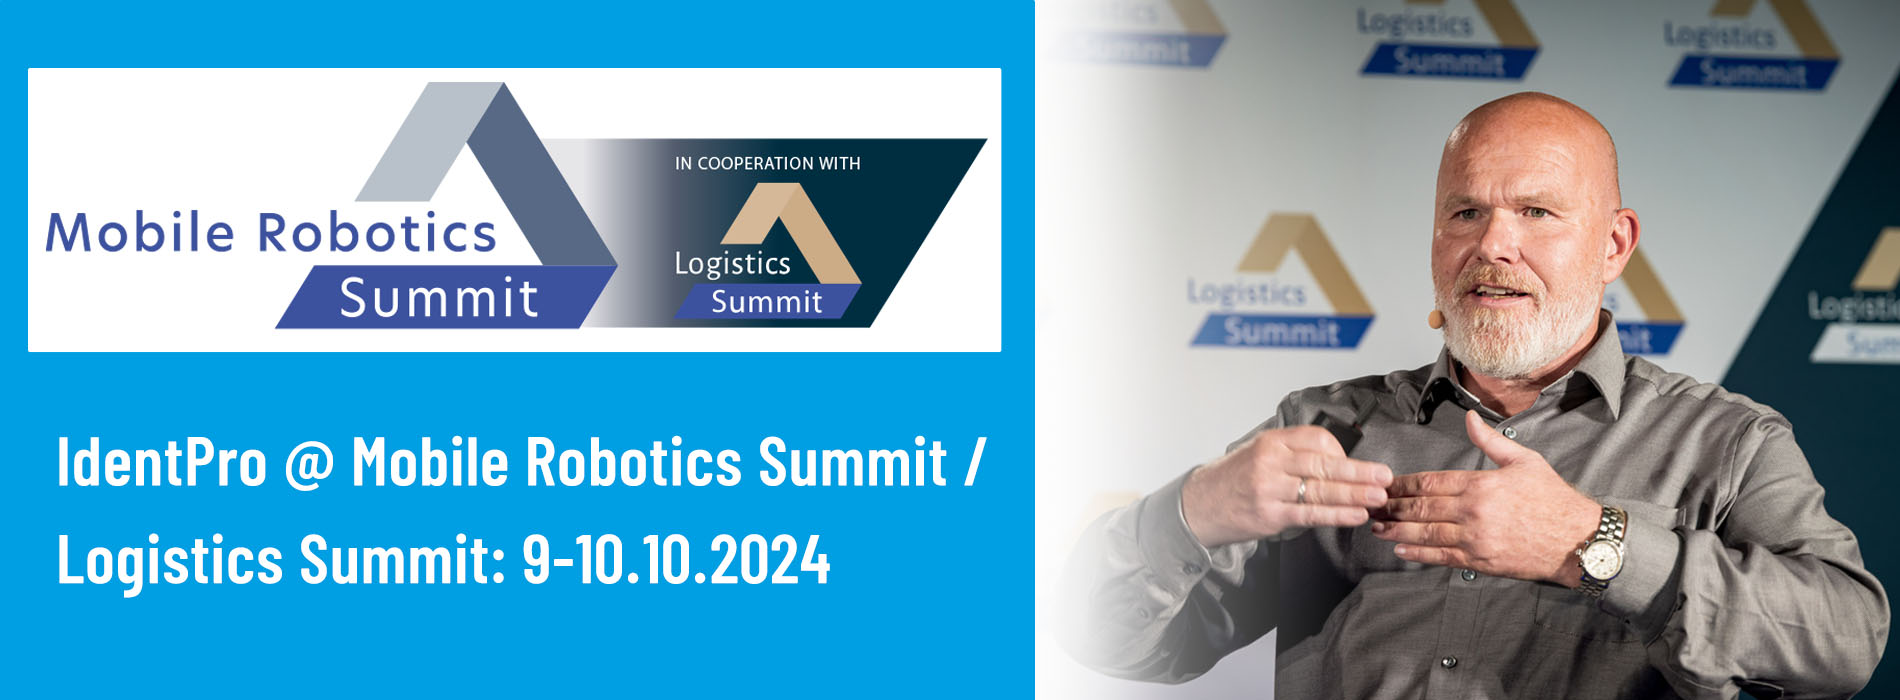 IdentPro at the Mobile Robotics Summit / Logistics Summit